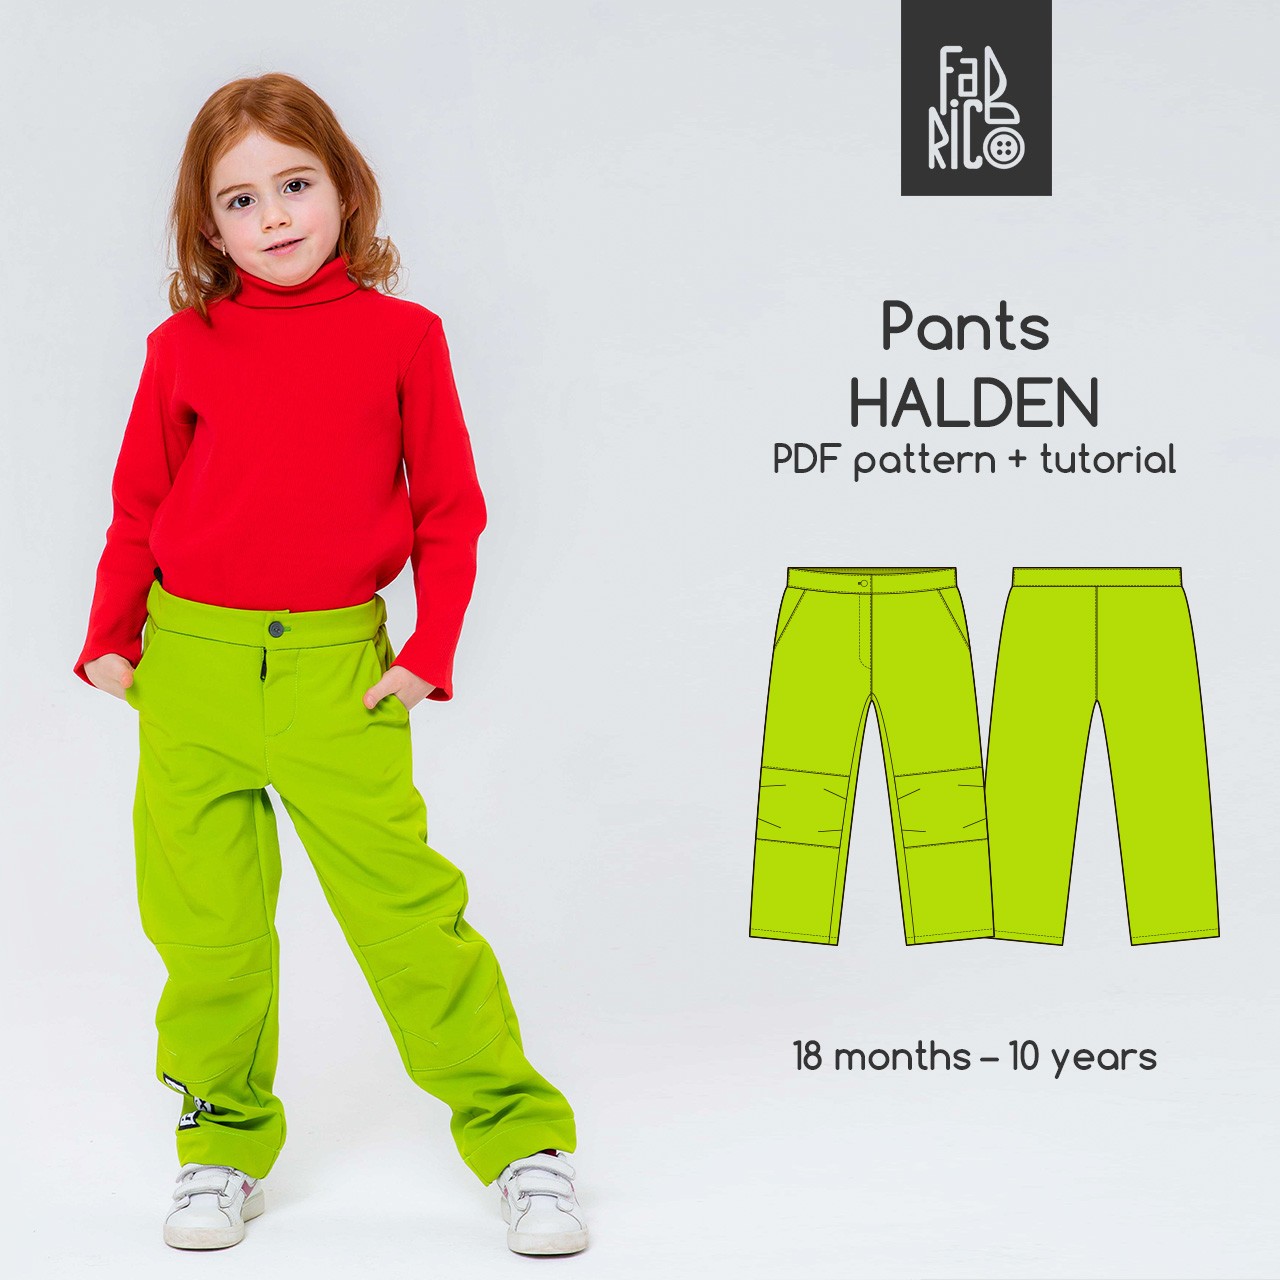 Outdoor rainproof child pants Halden sewing pattern – Fabrico